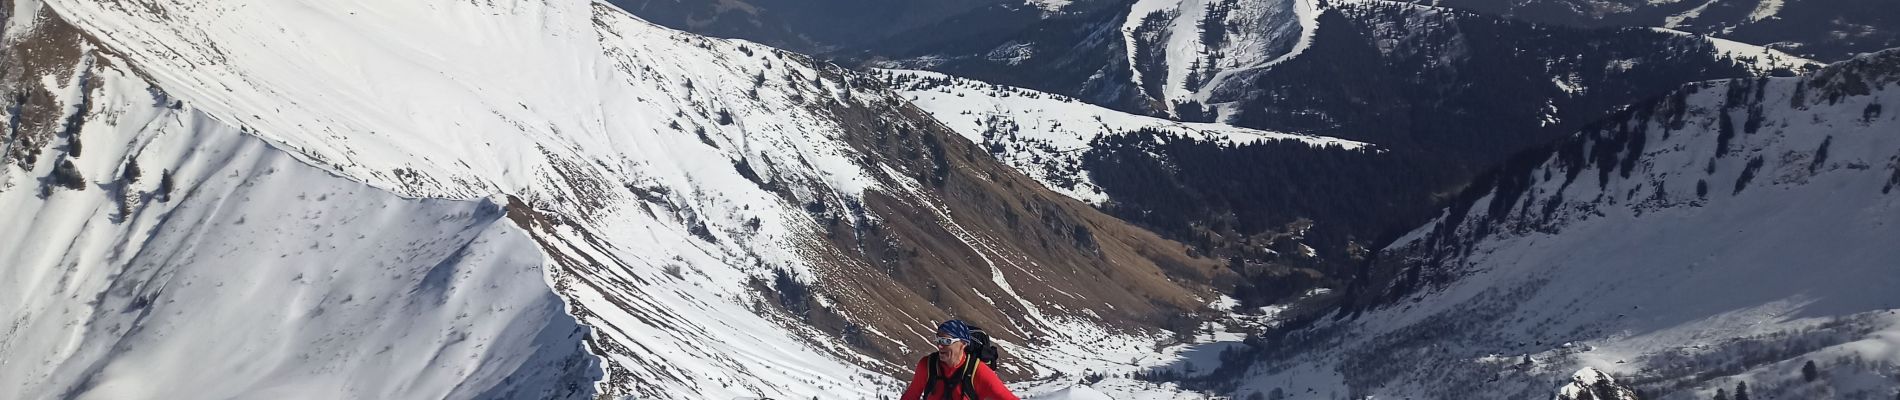 Tour Skiwanderen Taninges - pointe de Chalune  - Photo